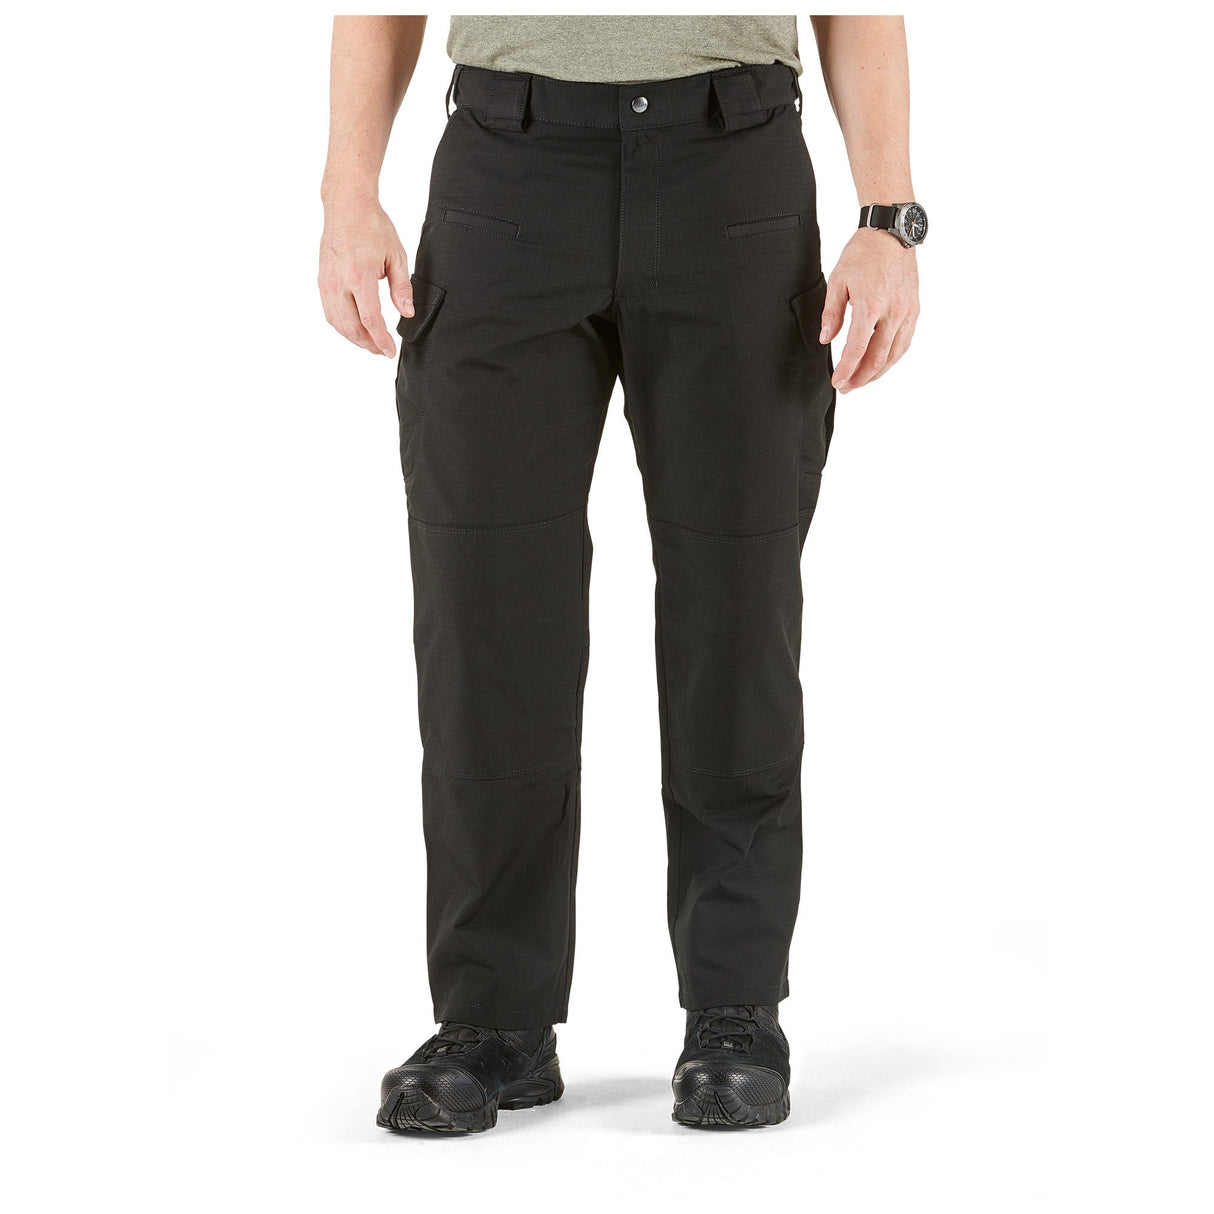 5.11 Pants: 74369 055 Men's Khaki Flex-Tac Ripstop Tactical Pants